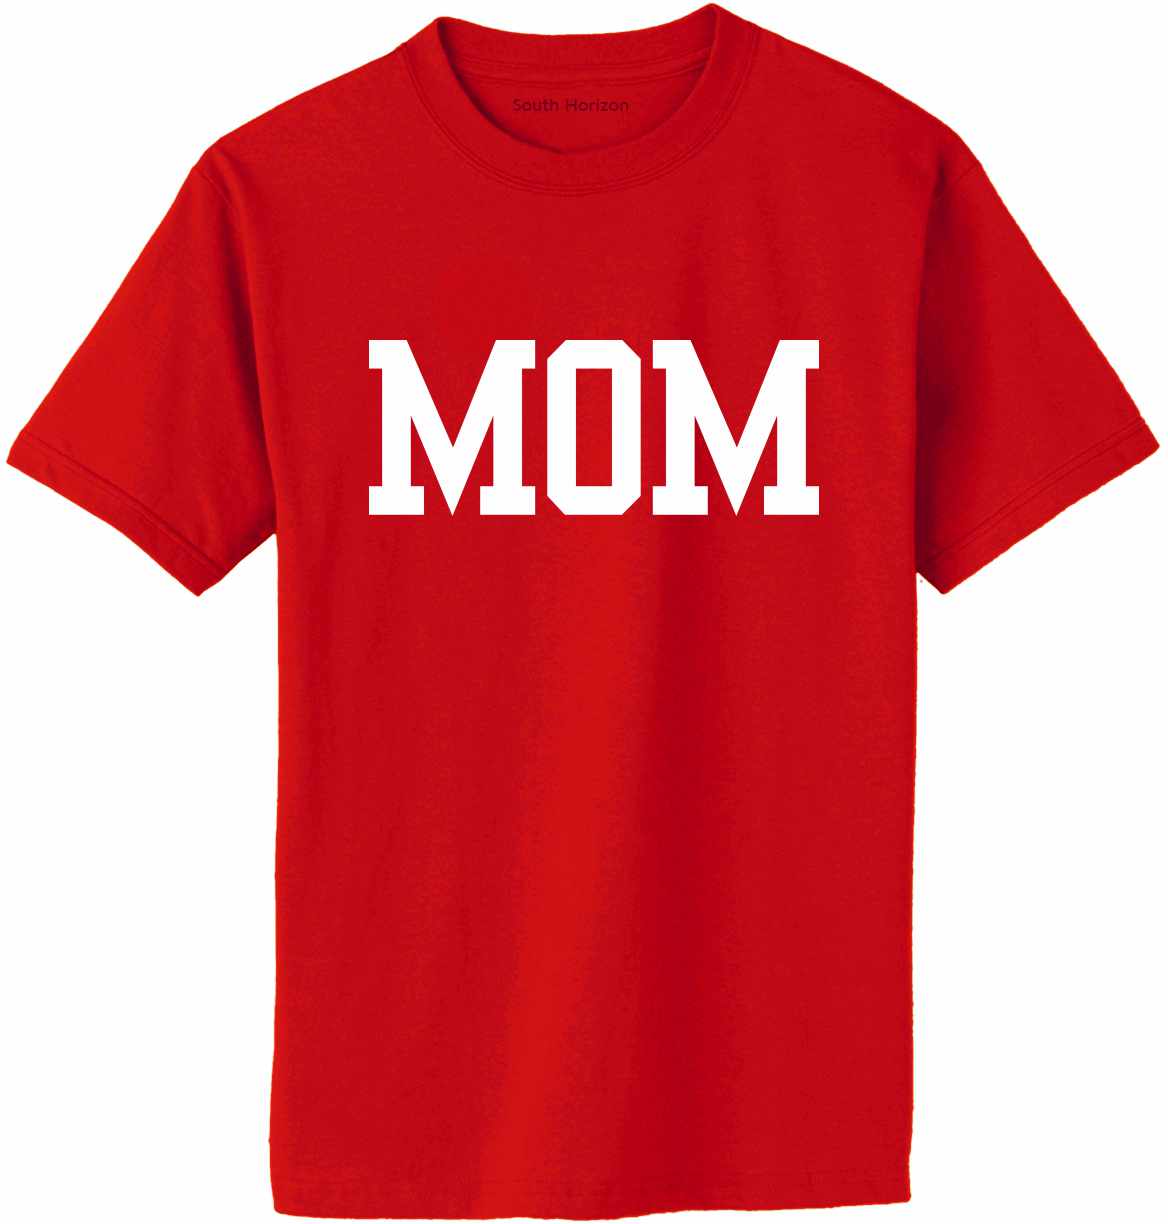 MOM Adult T-Shirt